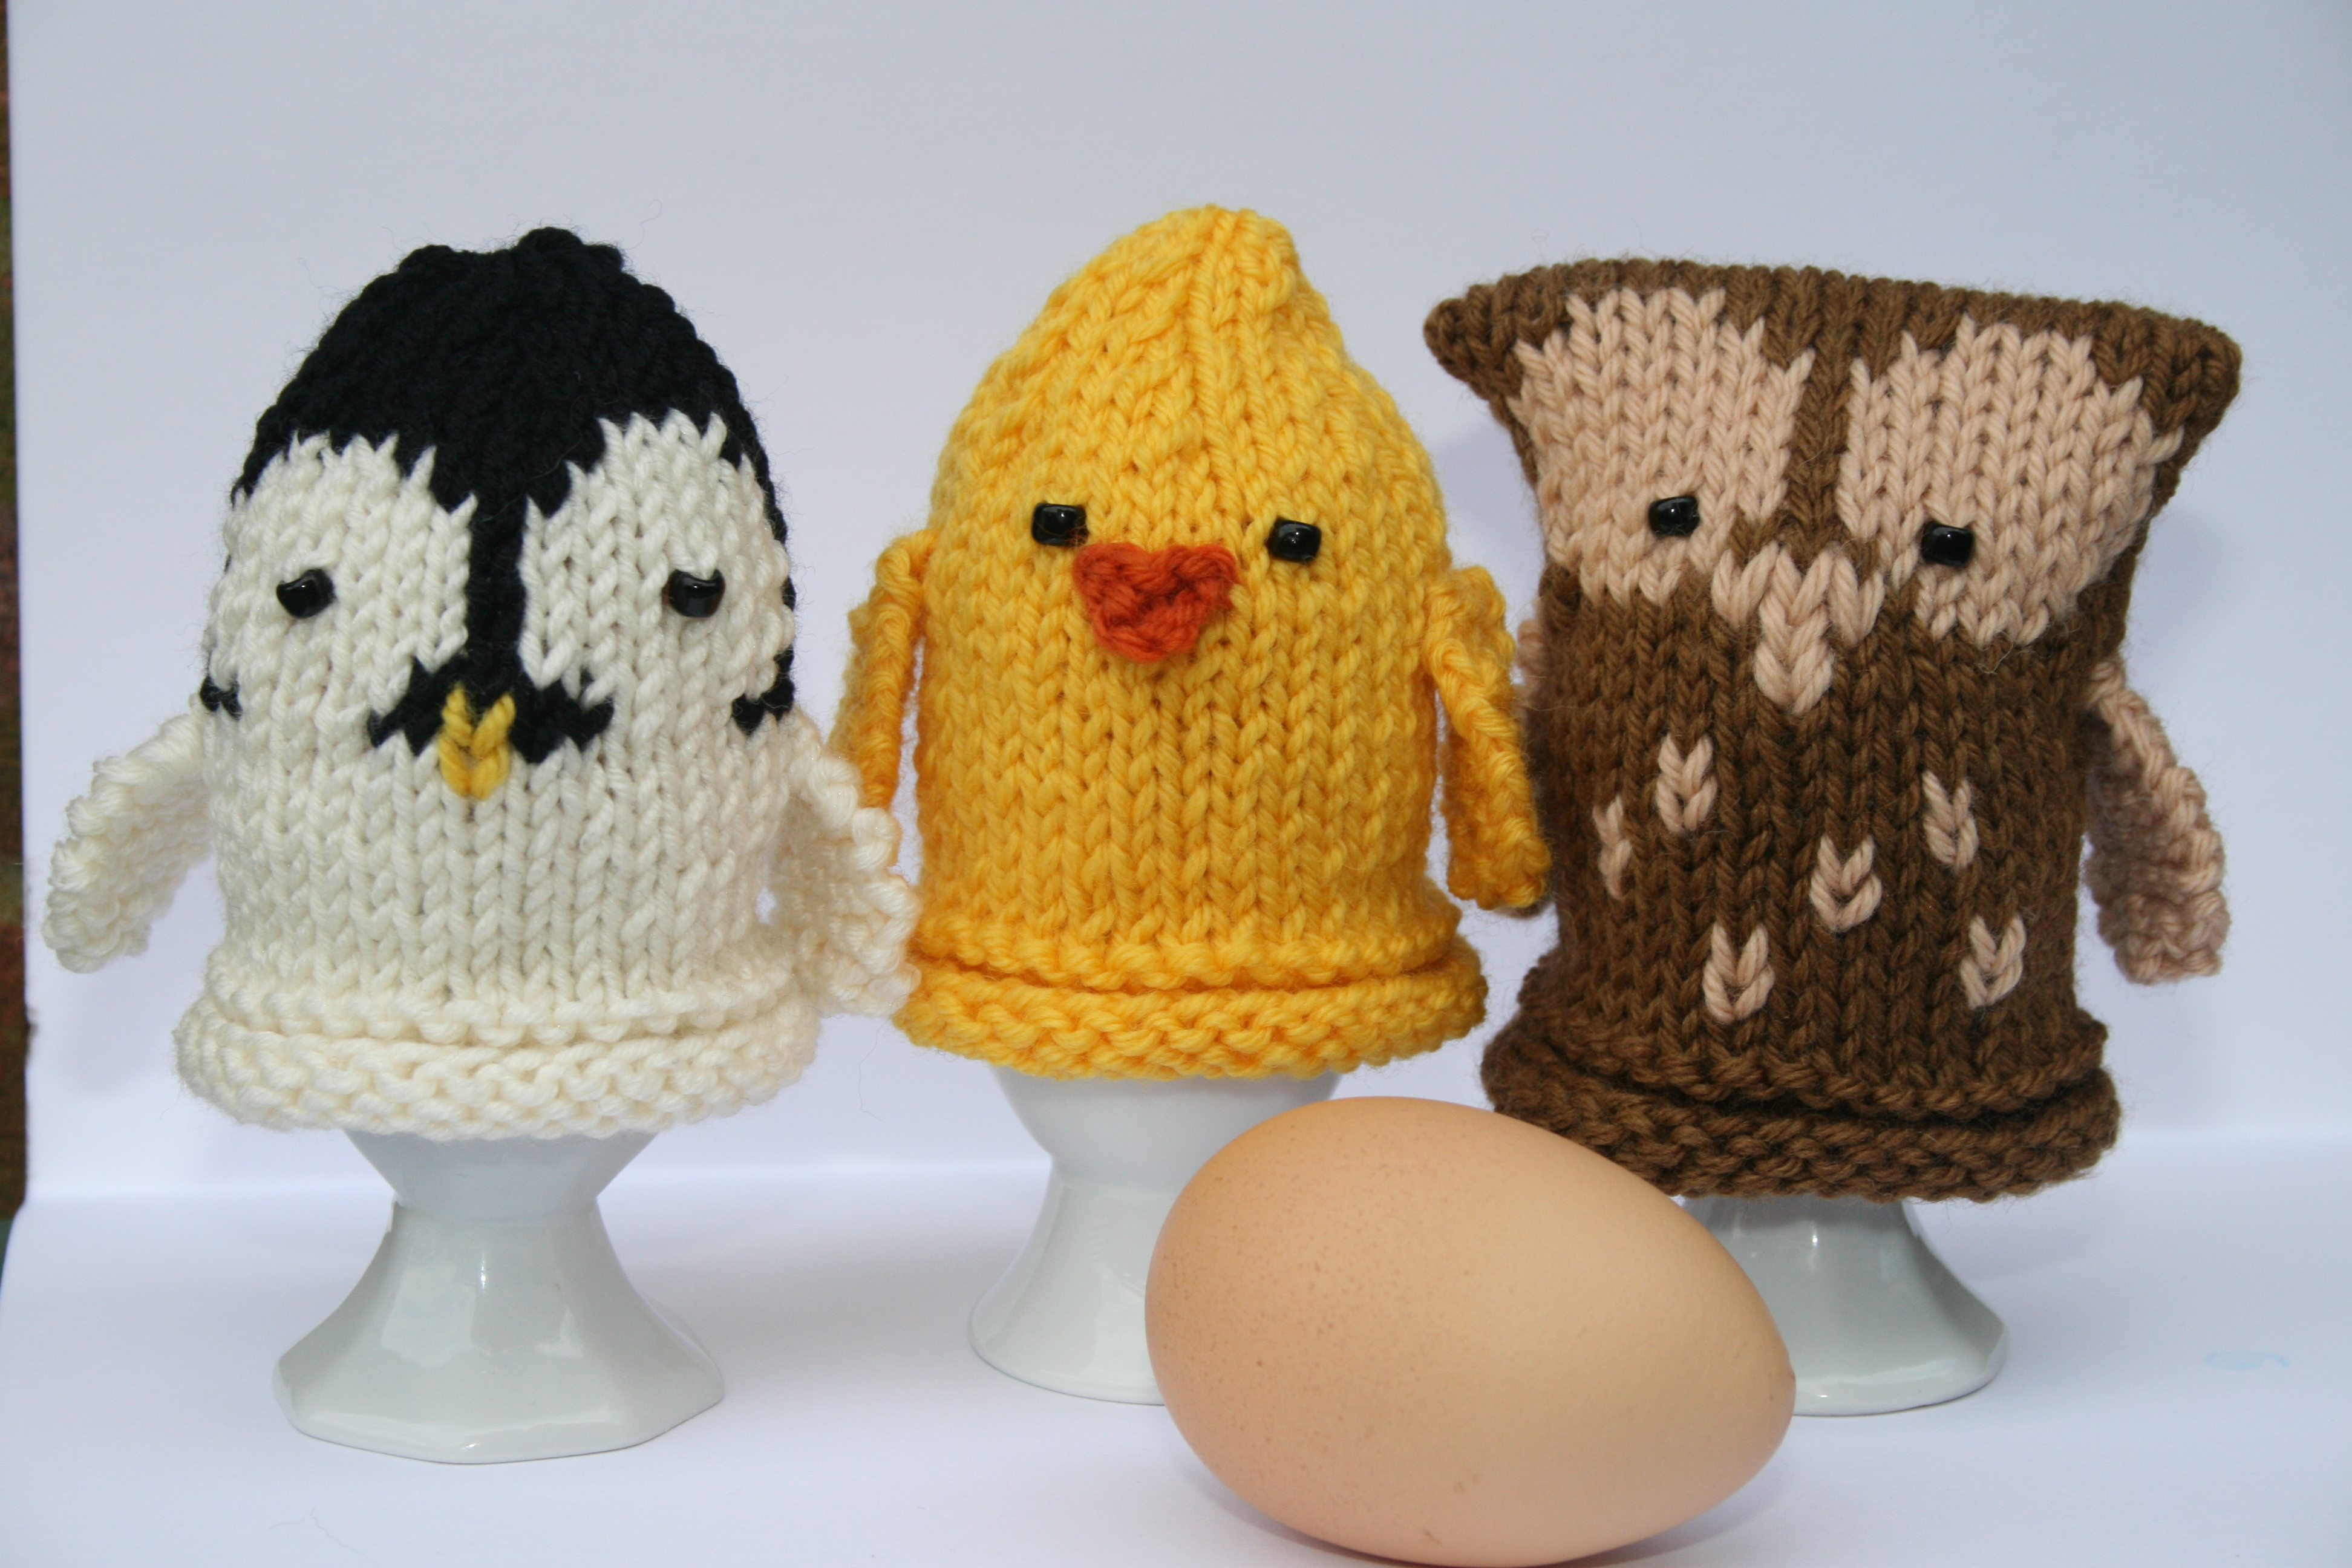 Egg Cosies Knitting Pattern Free Egg Cozy Sleakeknits